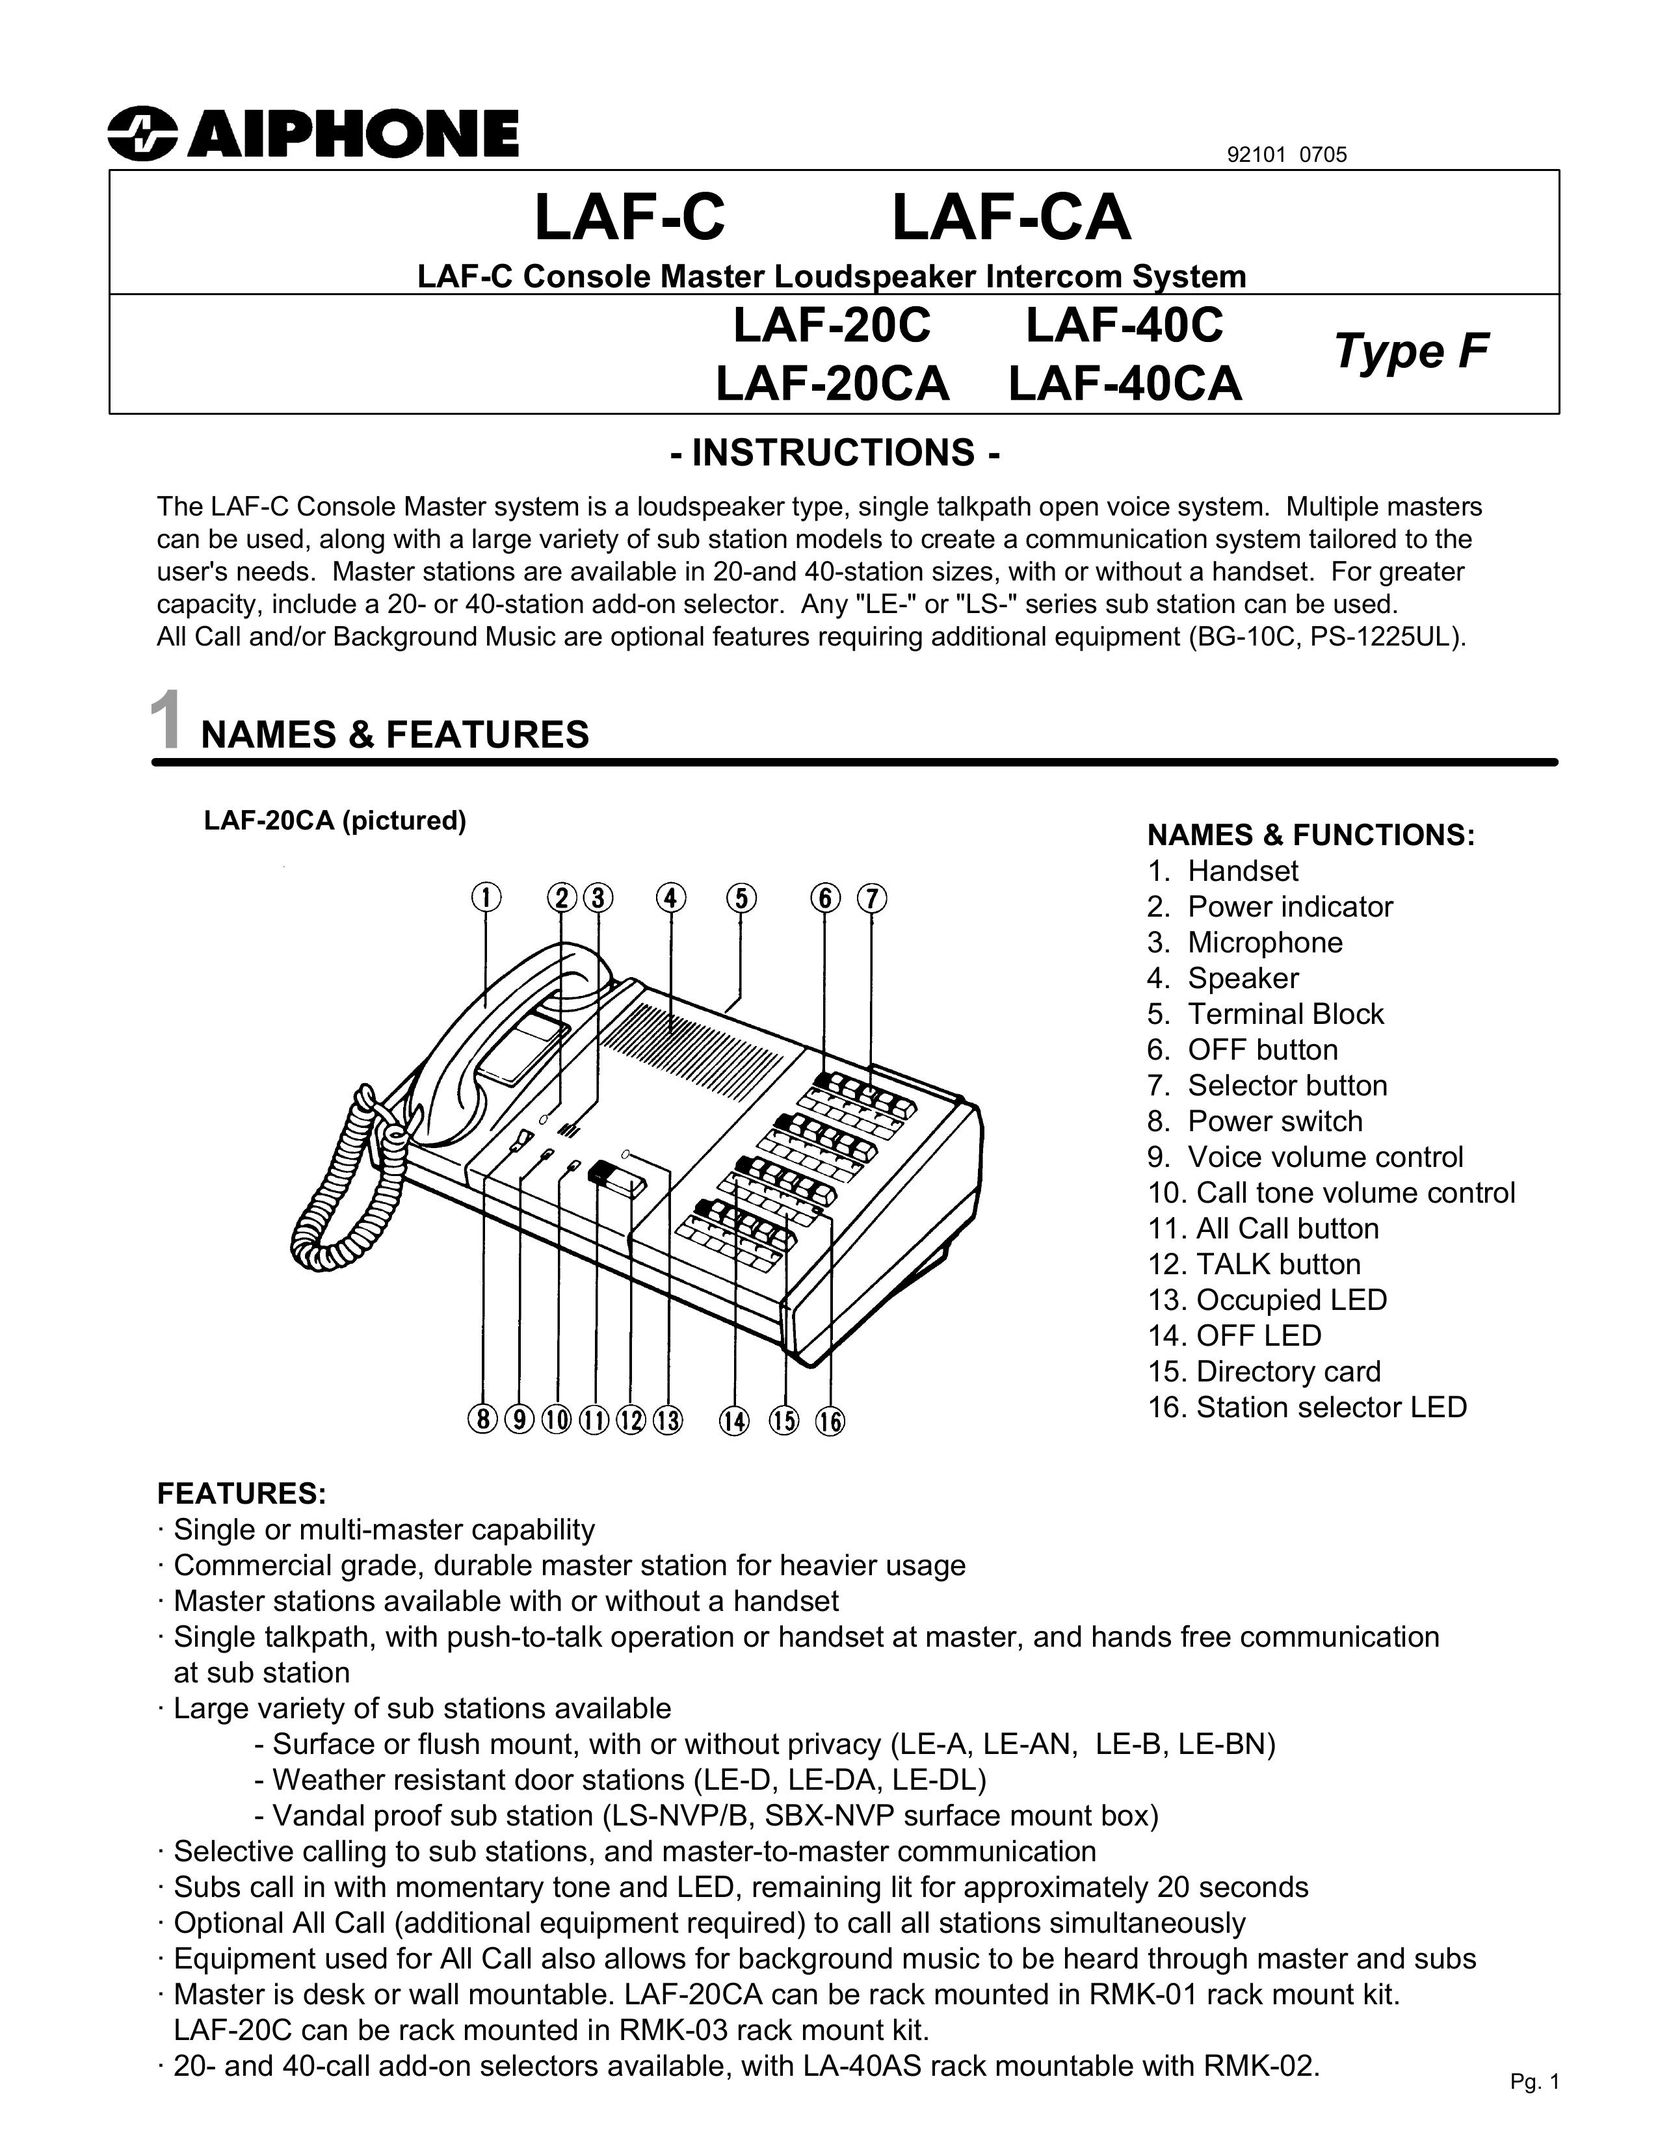 Aiphone LAF-40C Answering Machine User Manual